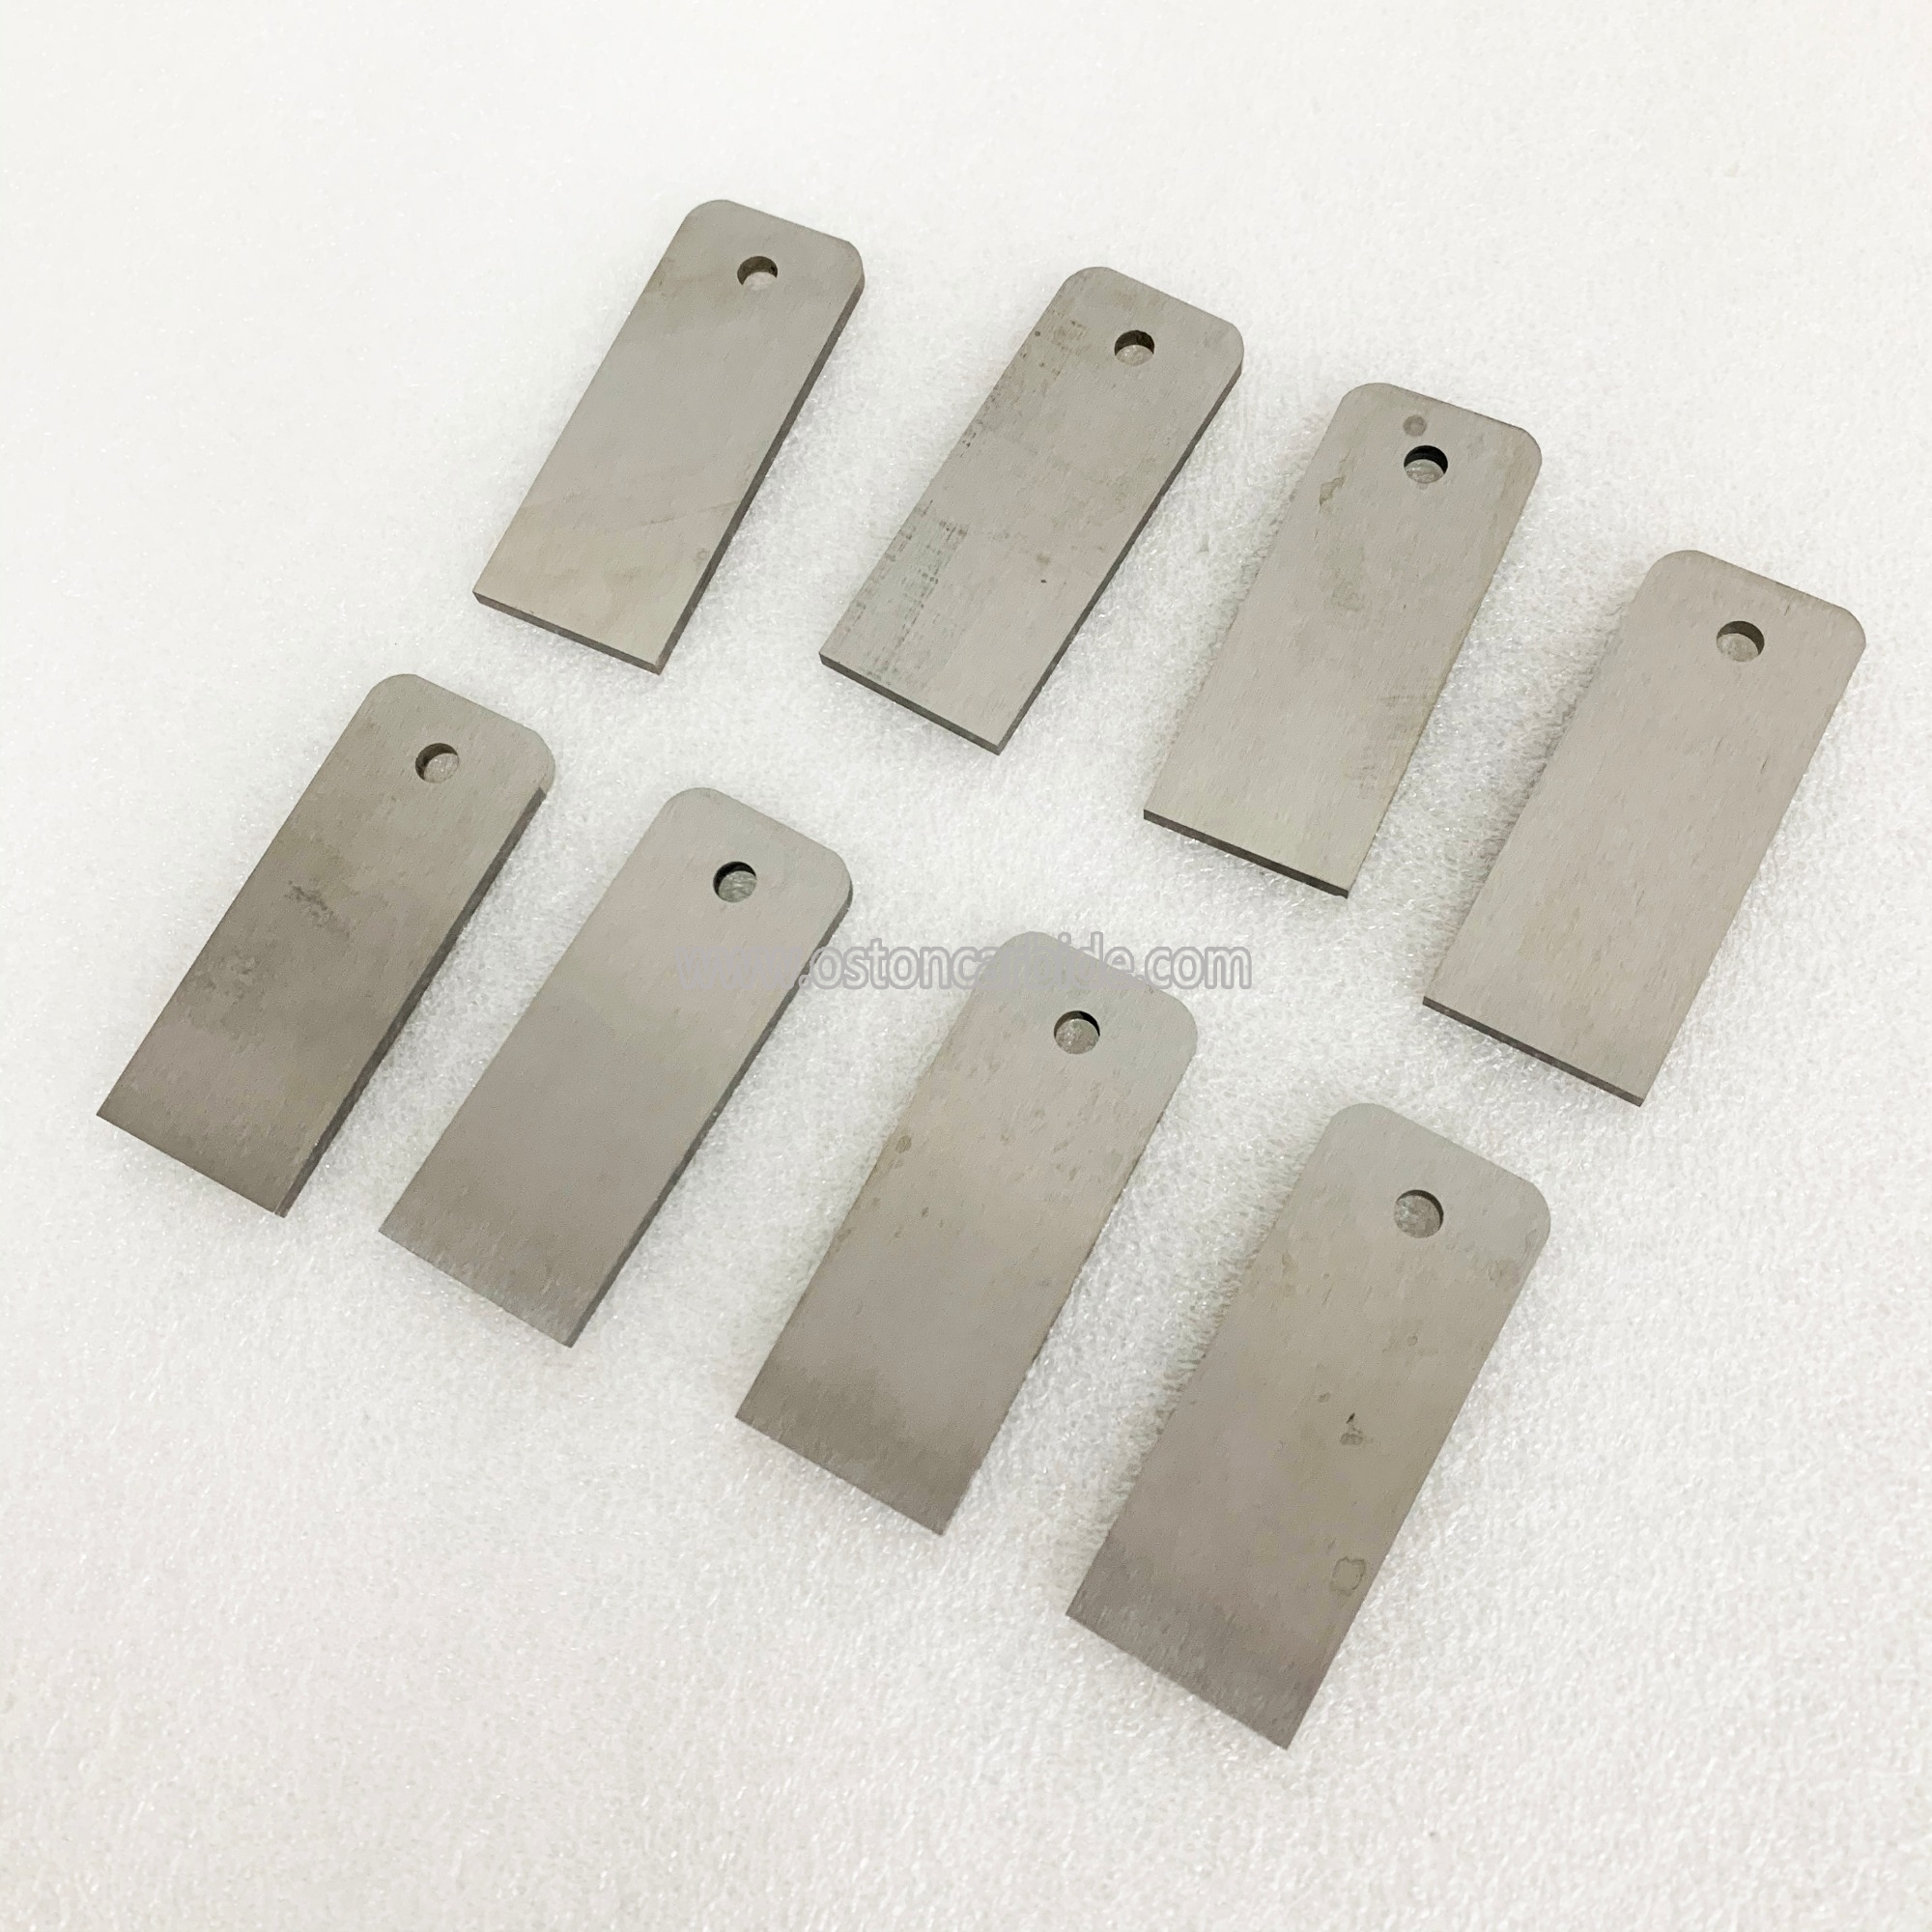 Tungsten Carbide Rectangular Plates With Shaft Holes 1